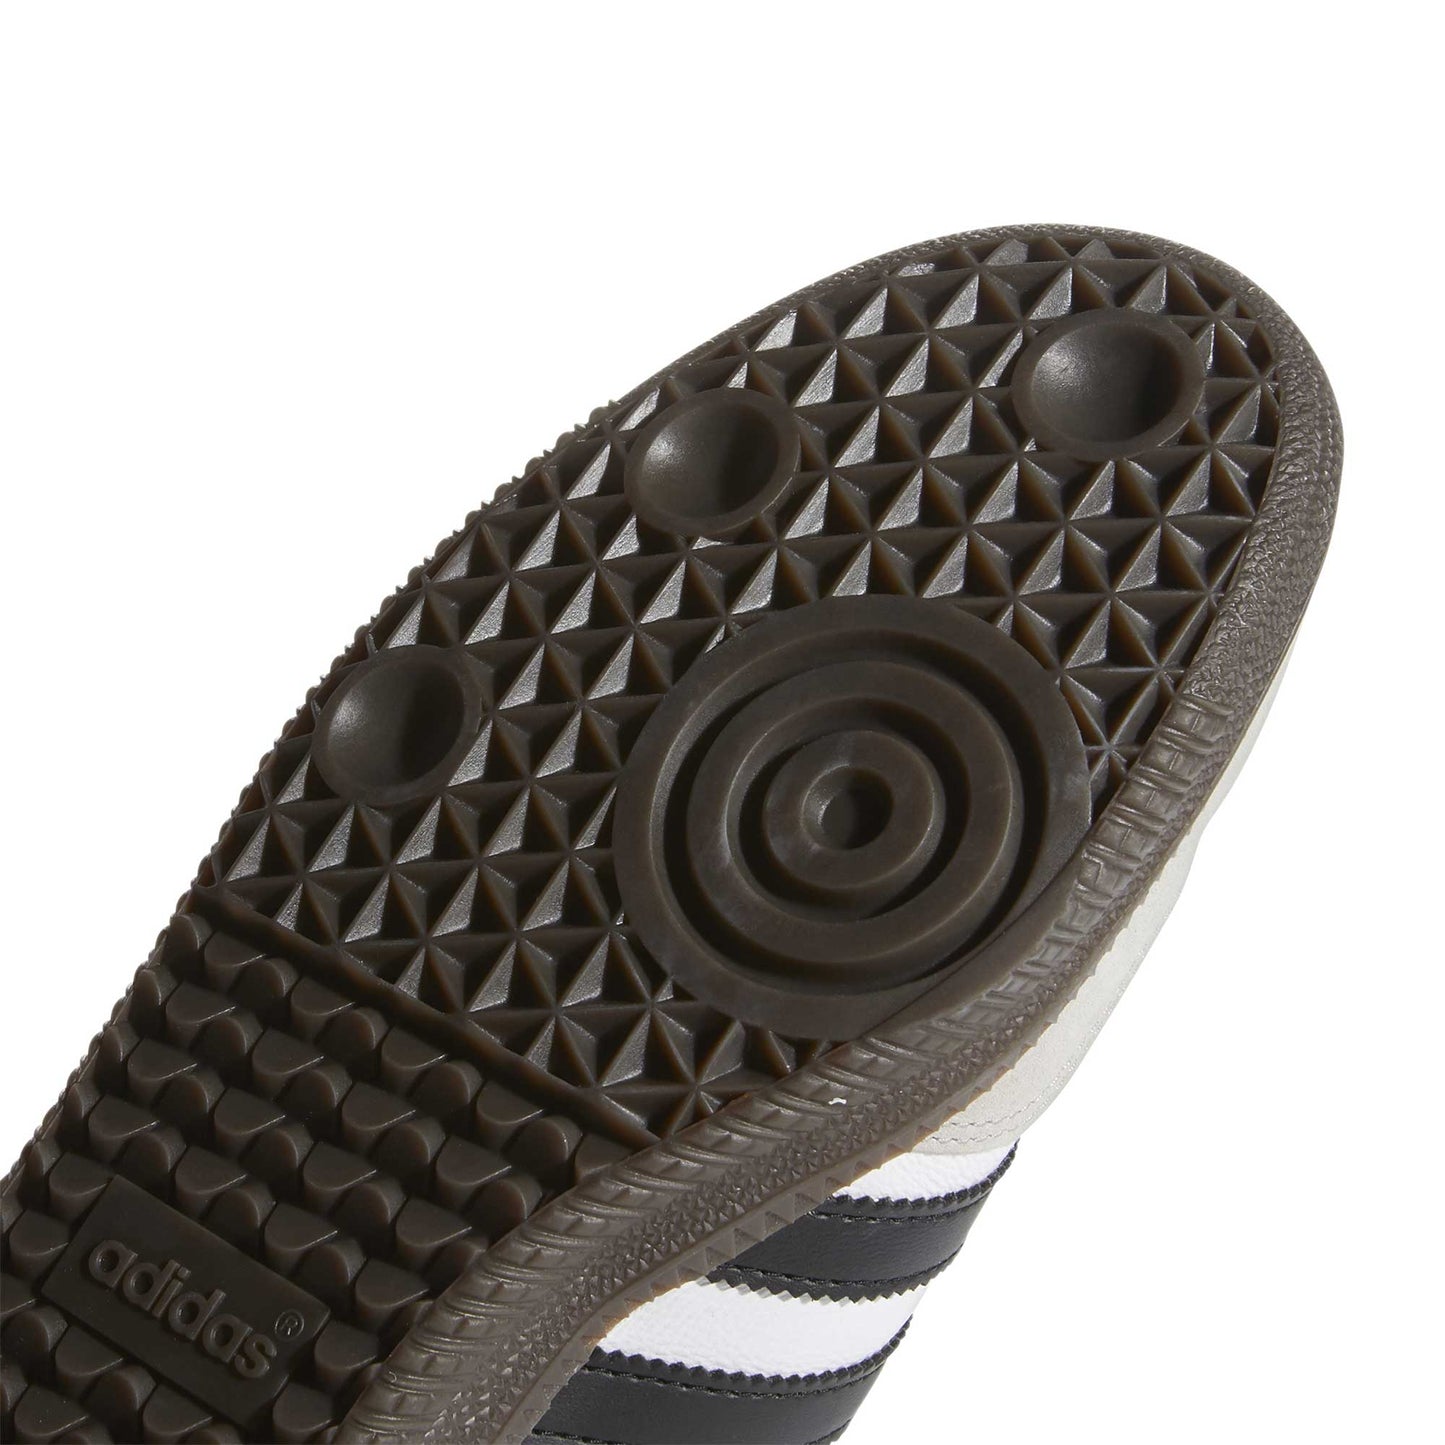 Adidas Samba ADV, cloud white/core black/gum - Tiki Room Skateboards - 8